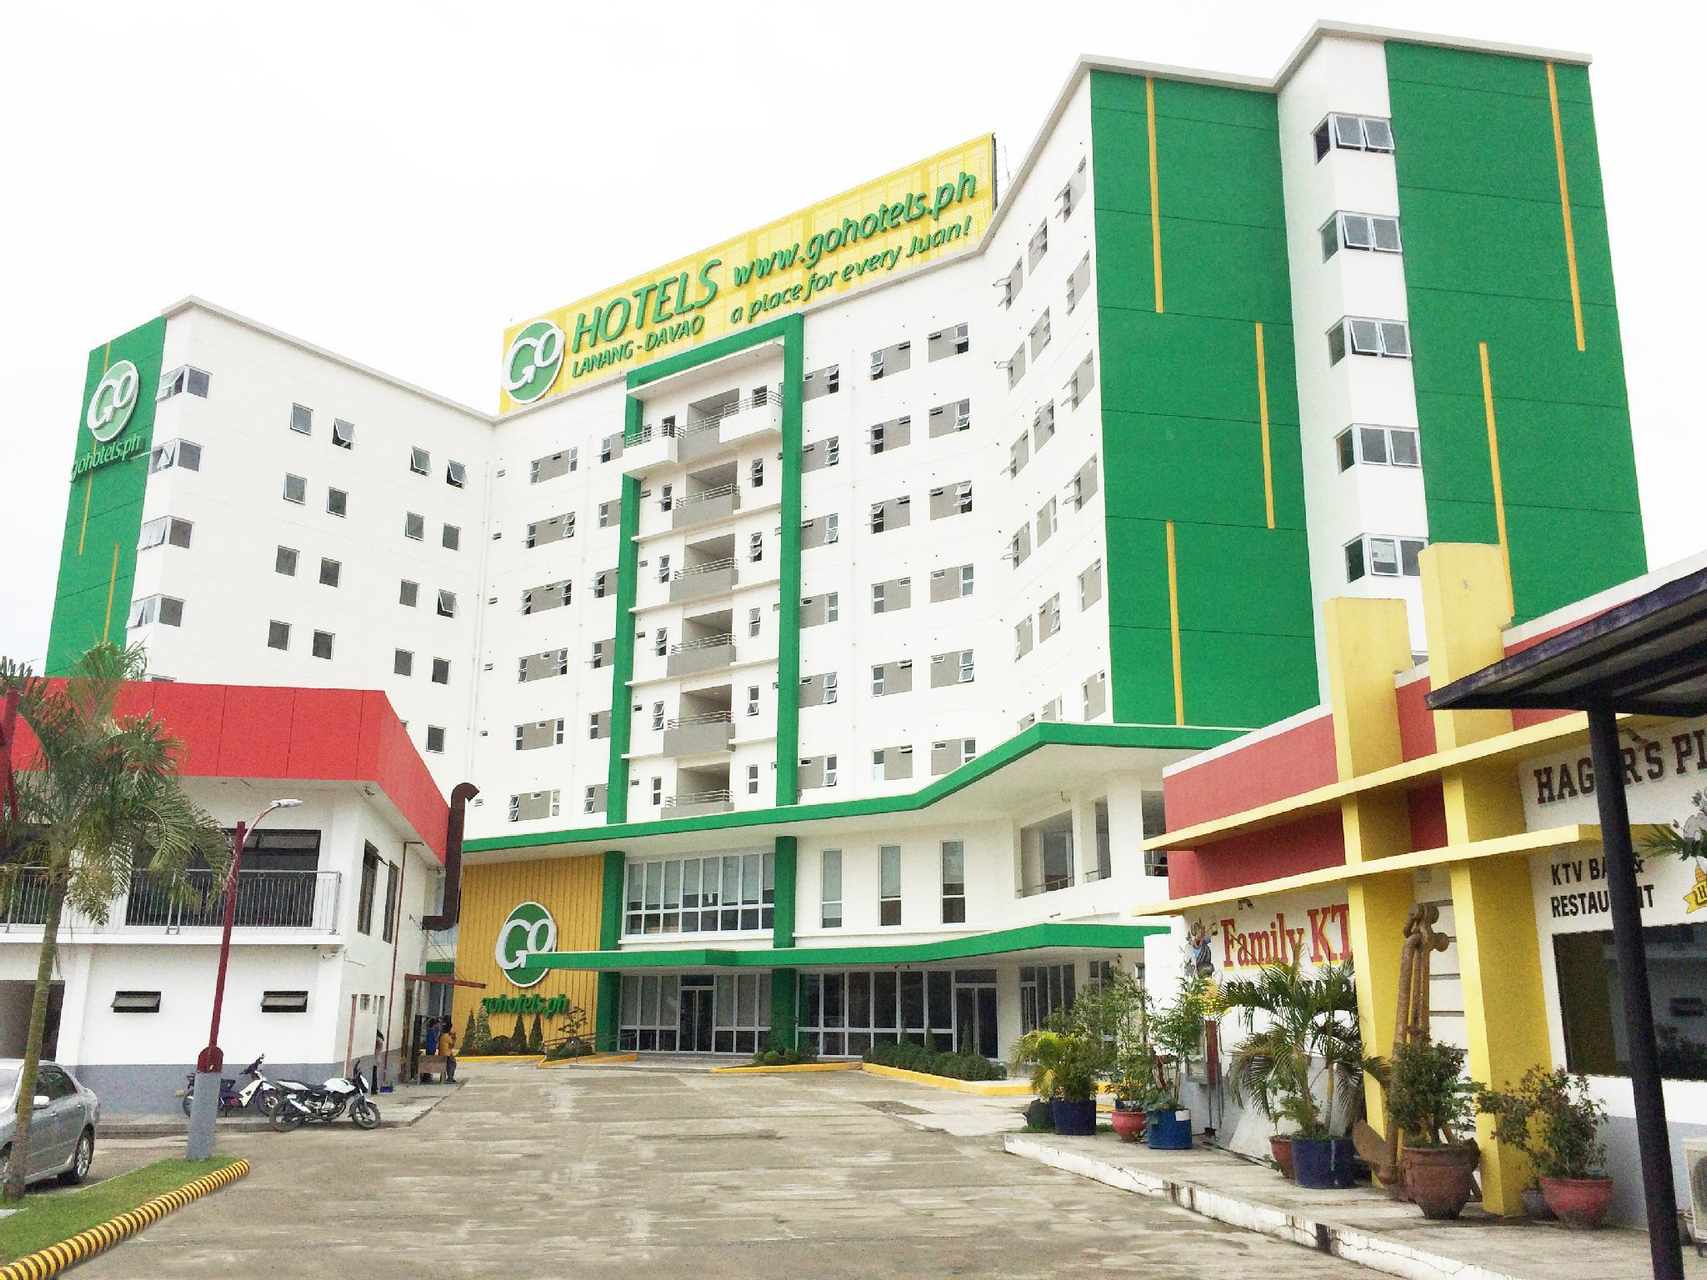 Exterior & Views, Go Hotels Lanang-Davao, Davao City